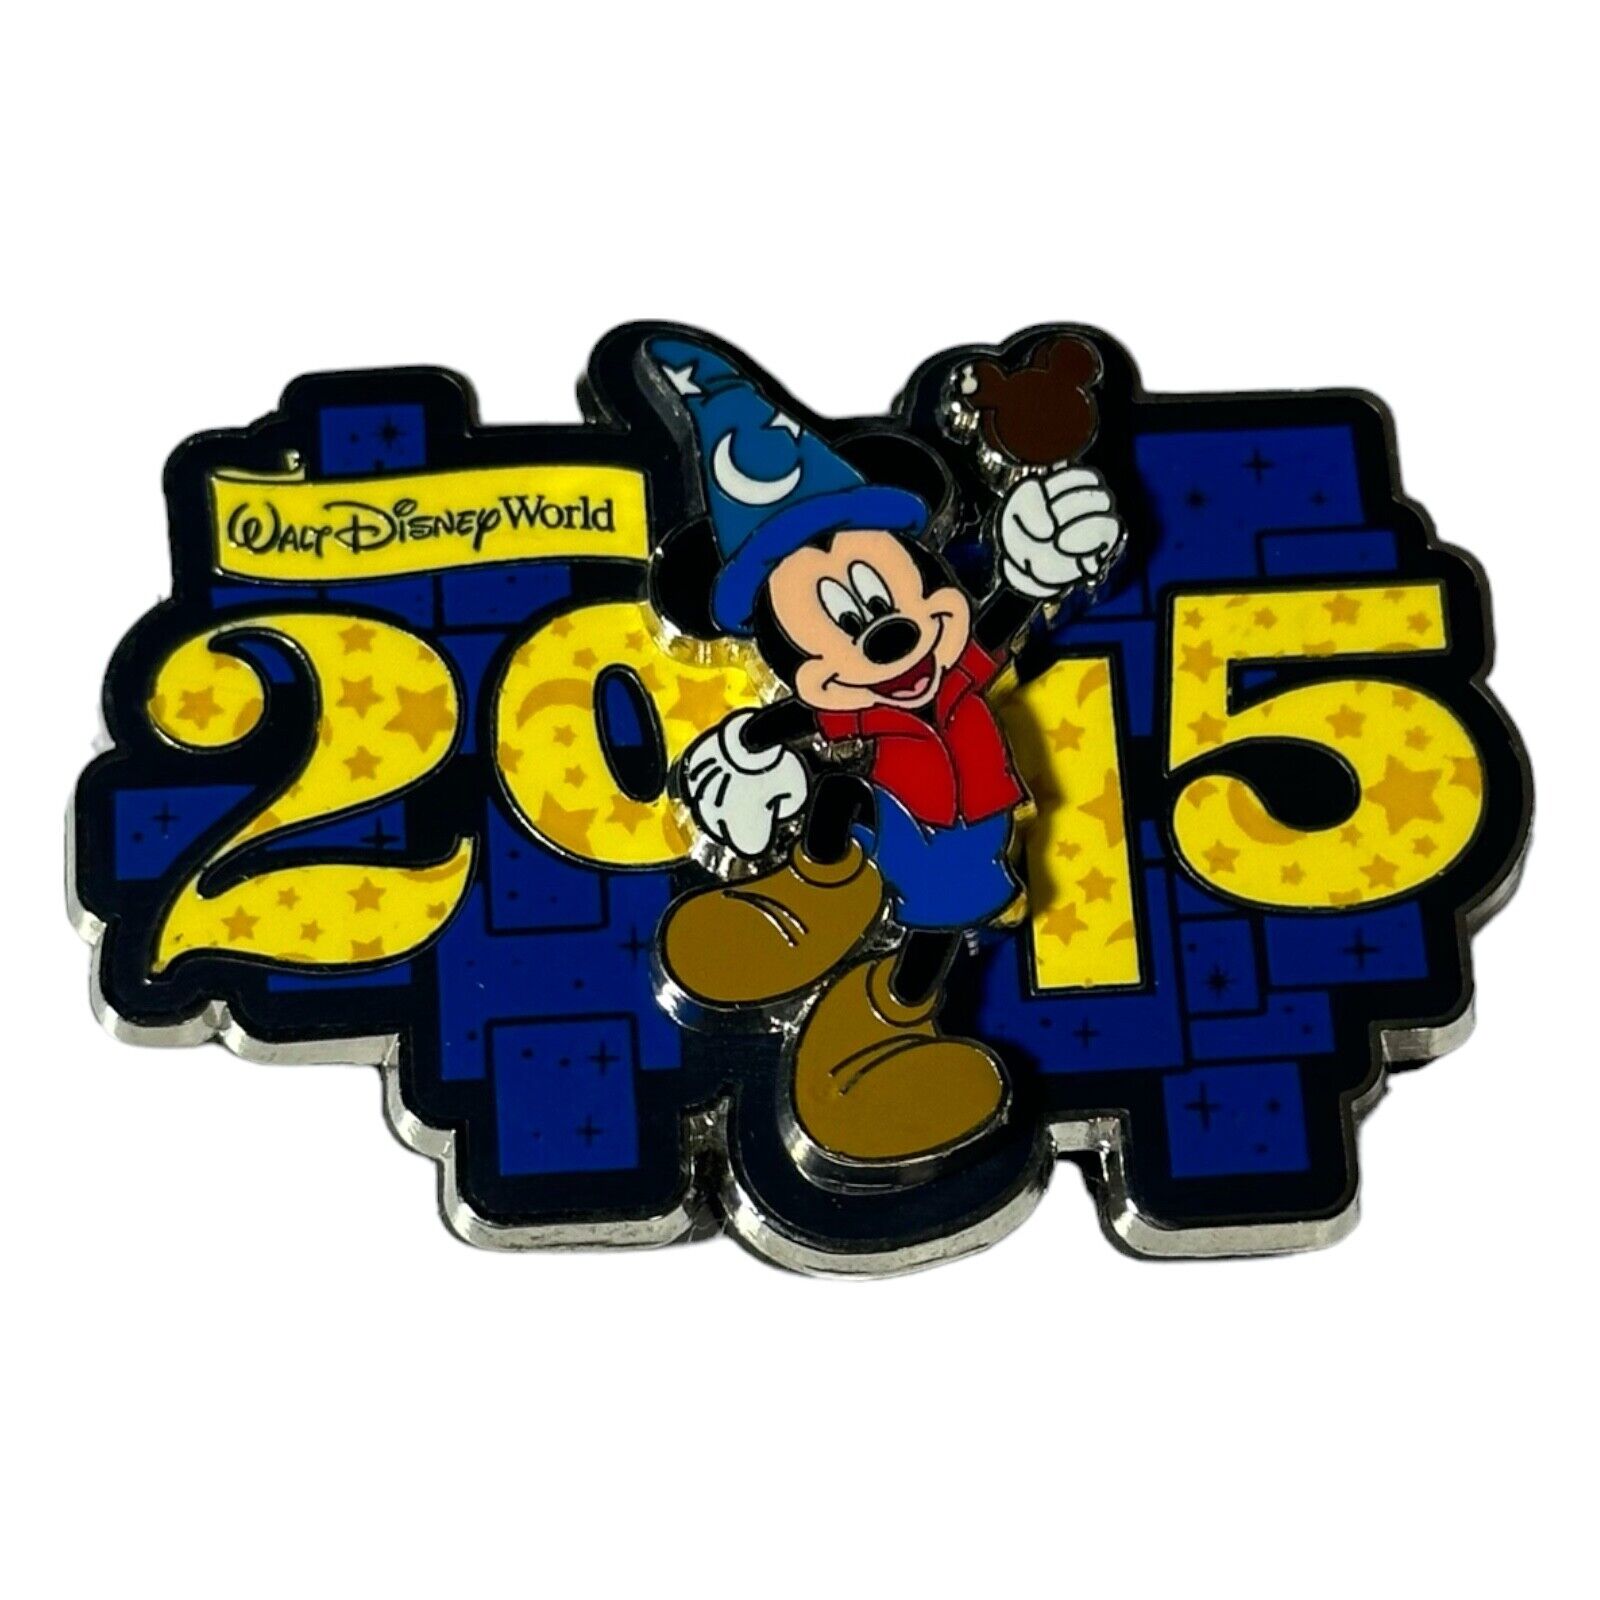 2015 Disney Parks Walt Disney World Mickey Mouse Magnet